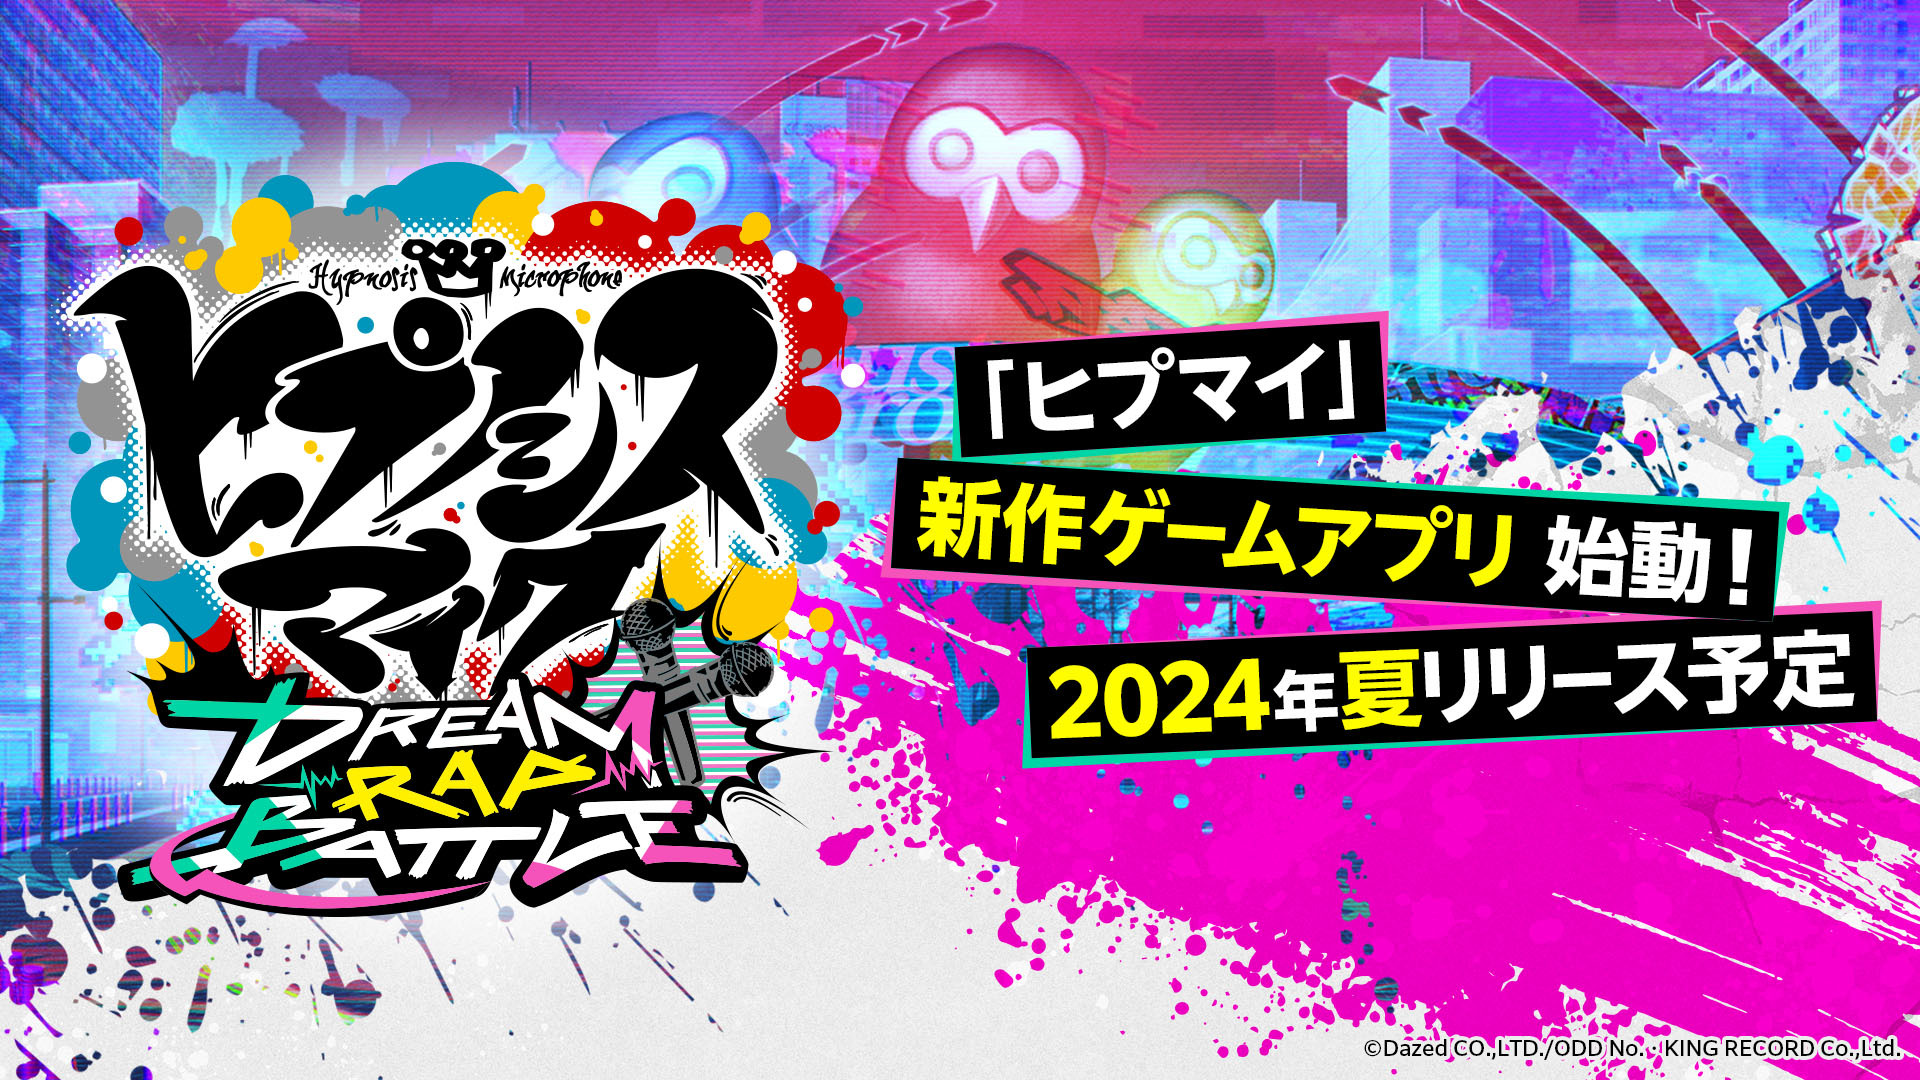 RAP对决企划《催眠麦克风》全新手机游戏《DreamRapBattle》曝光预计今夏于日本推出